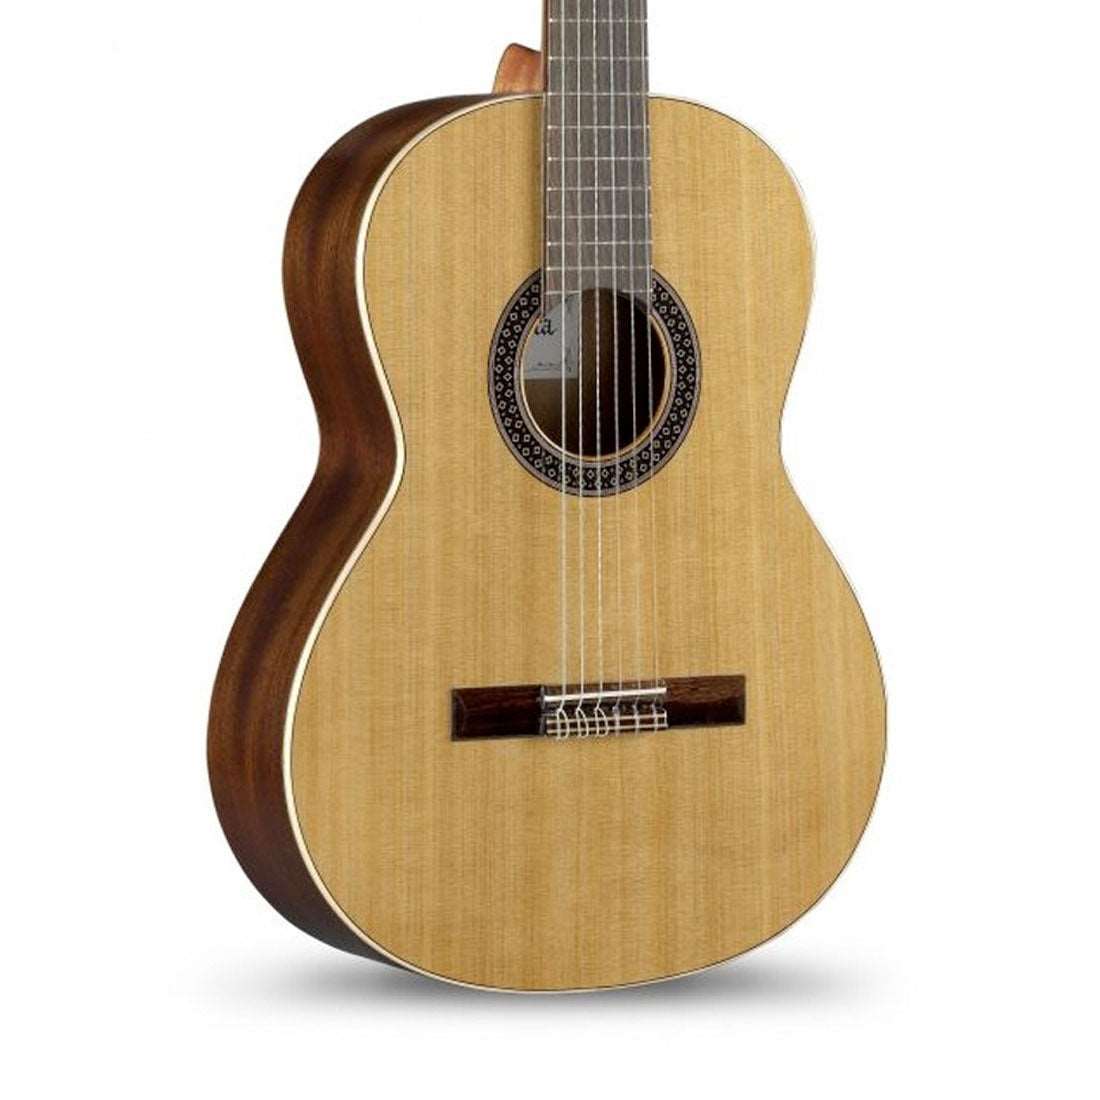 Alhambra 1C HT (Hybrid Terra) Cedar Top Classical Guitar